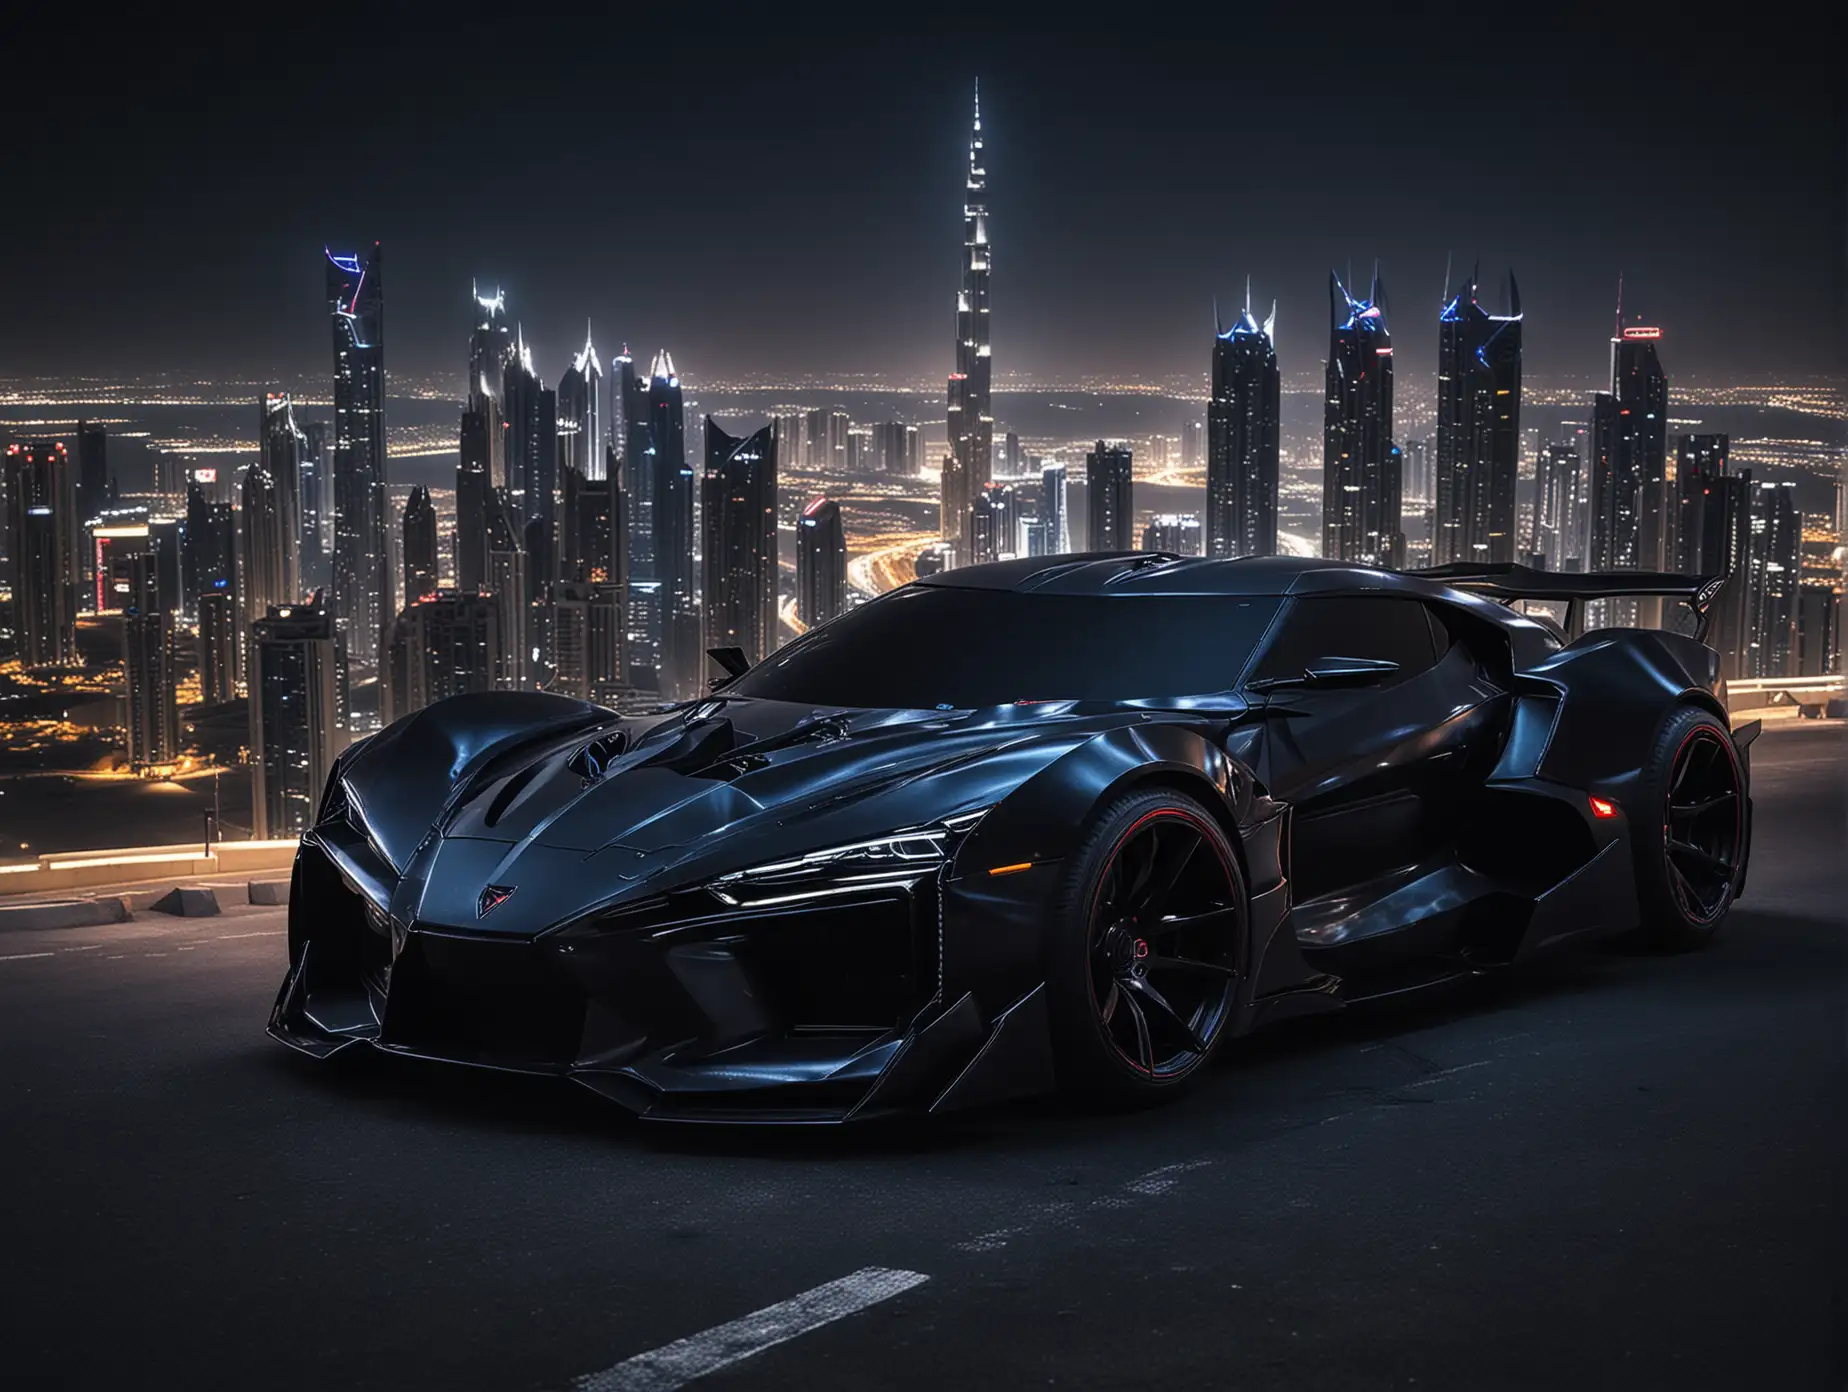 Futuristic-Japanese-Cars-Racing-Downhill-in-Dubai-Cityscape-at-Night